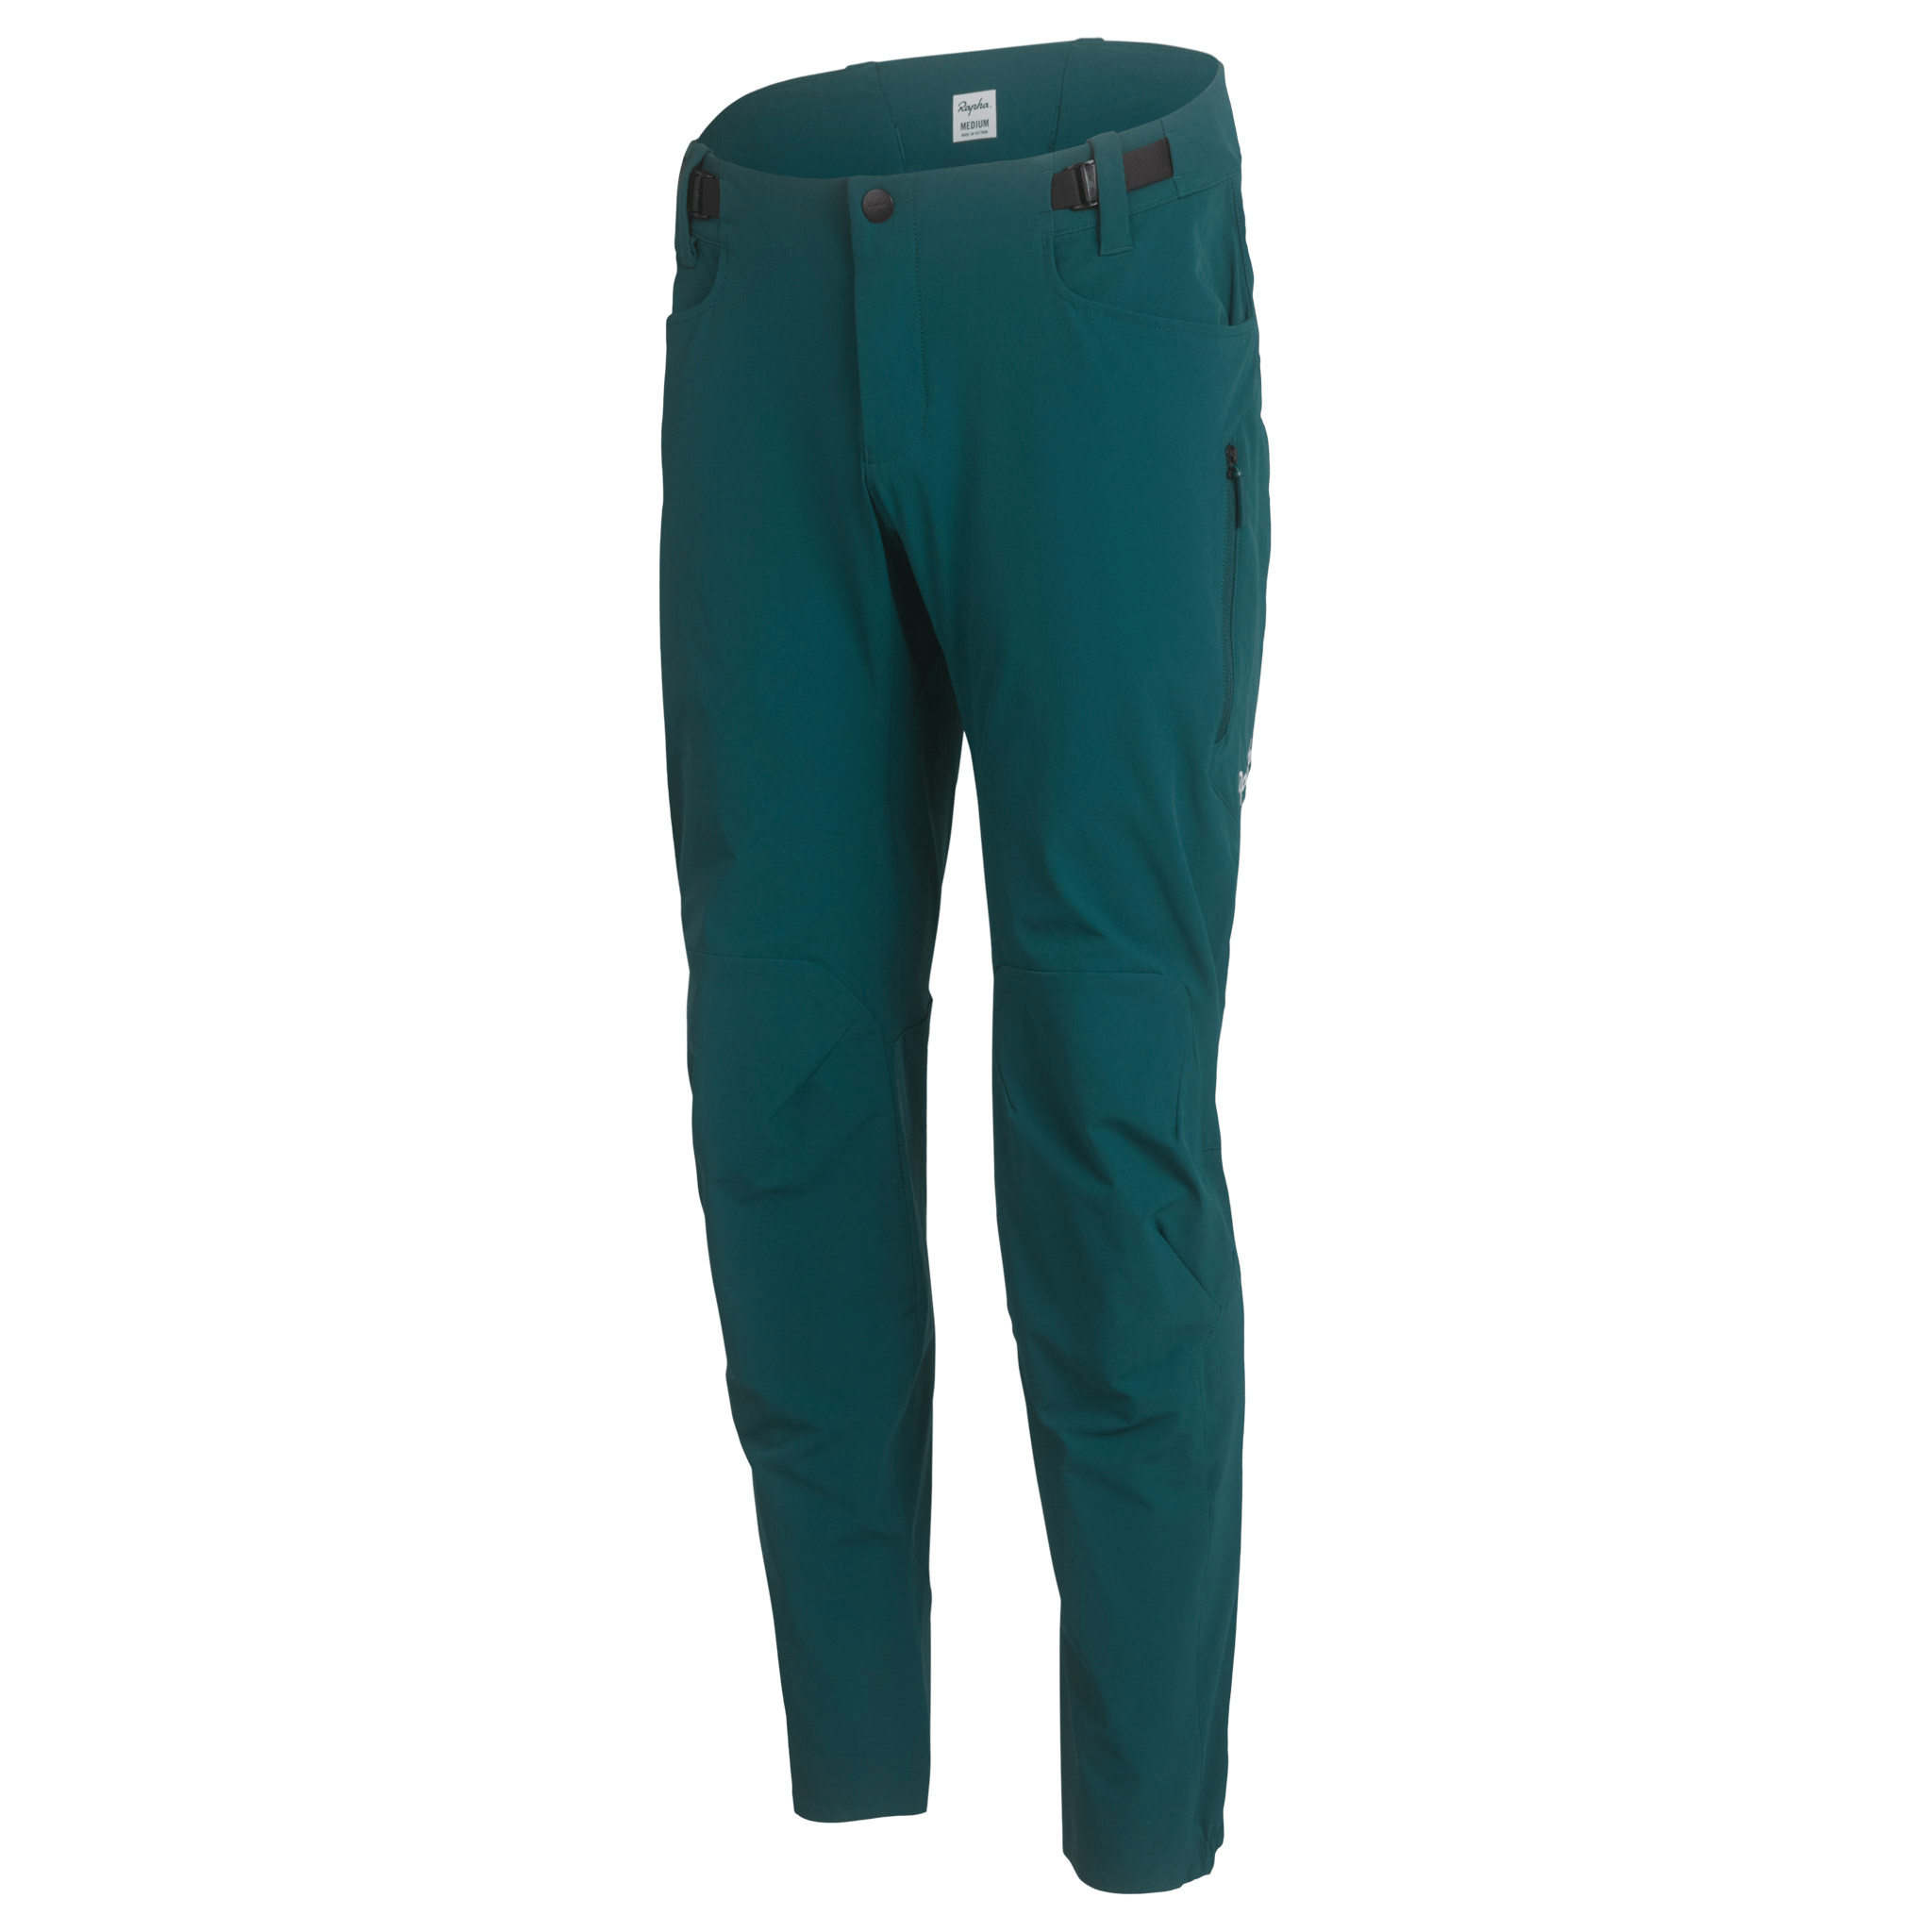 Rapha Men's Trail Pants Blue Green/Egg Shell XL Apparel - Clothing - Men's Tights & Pants - Mountain